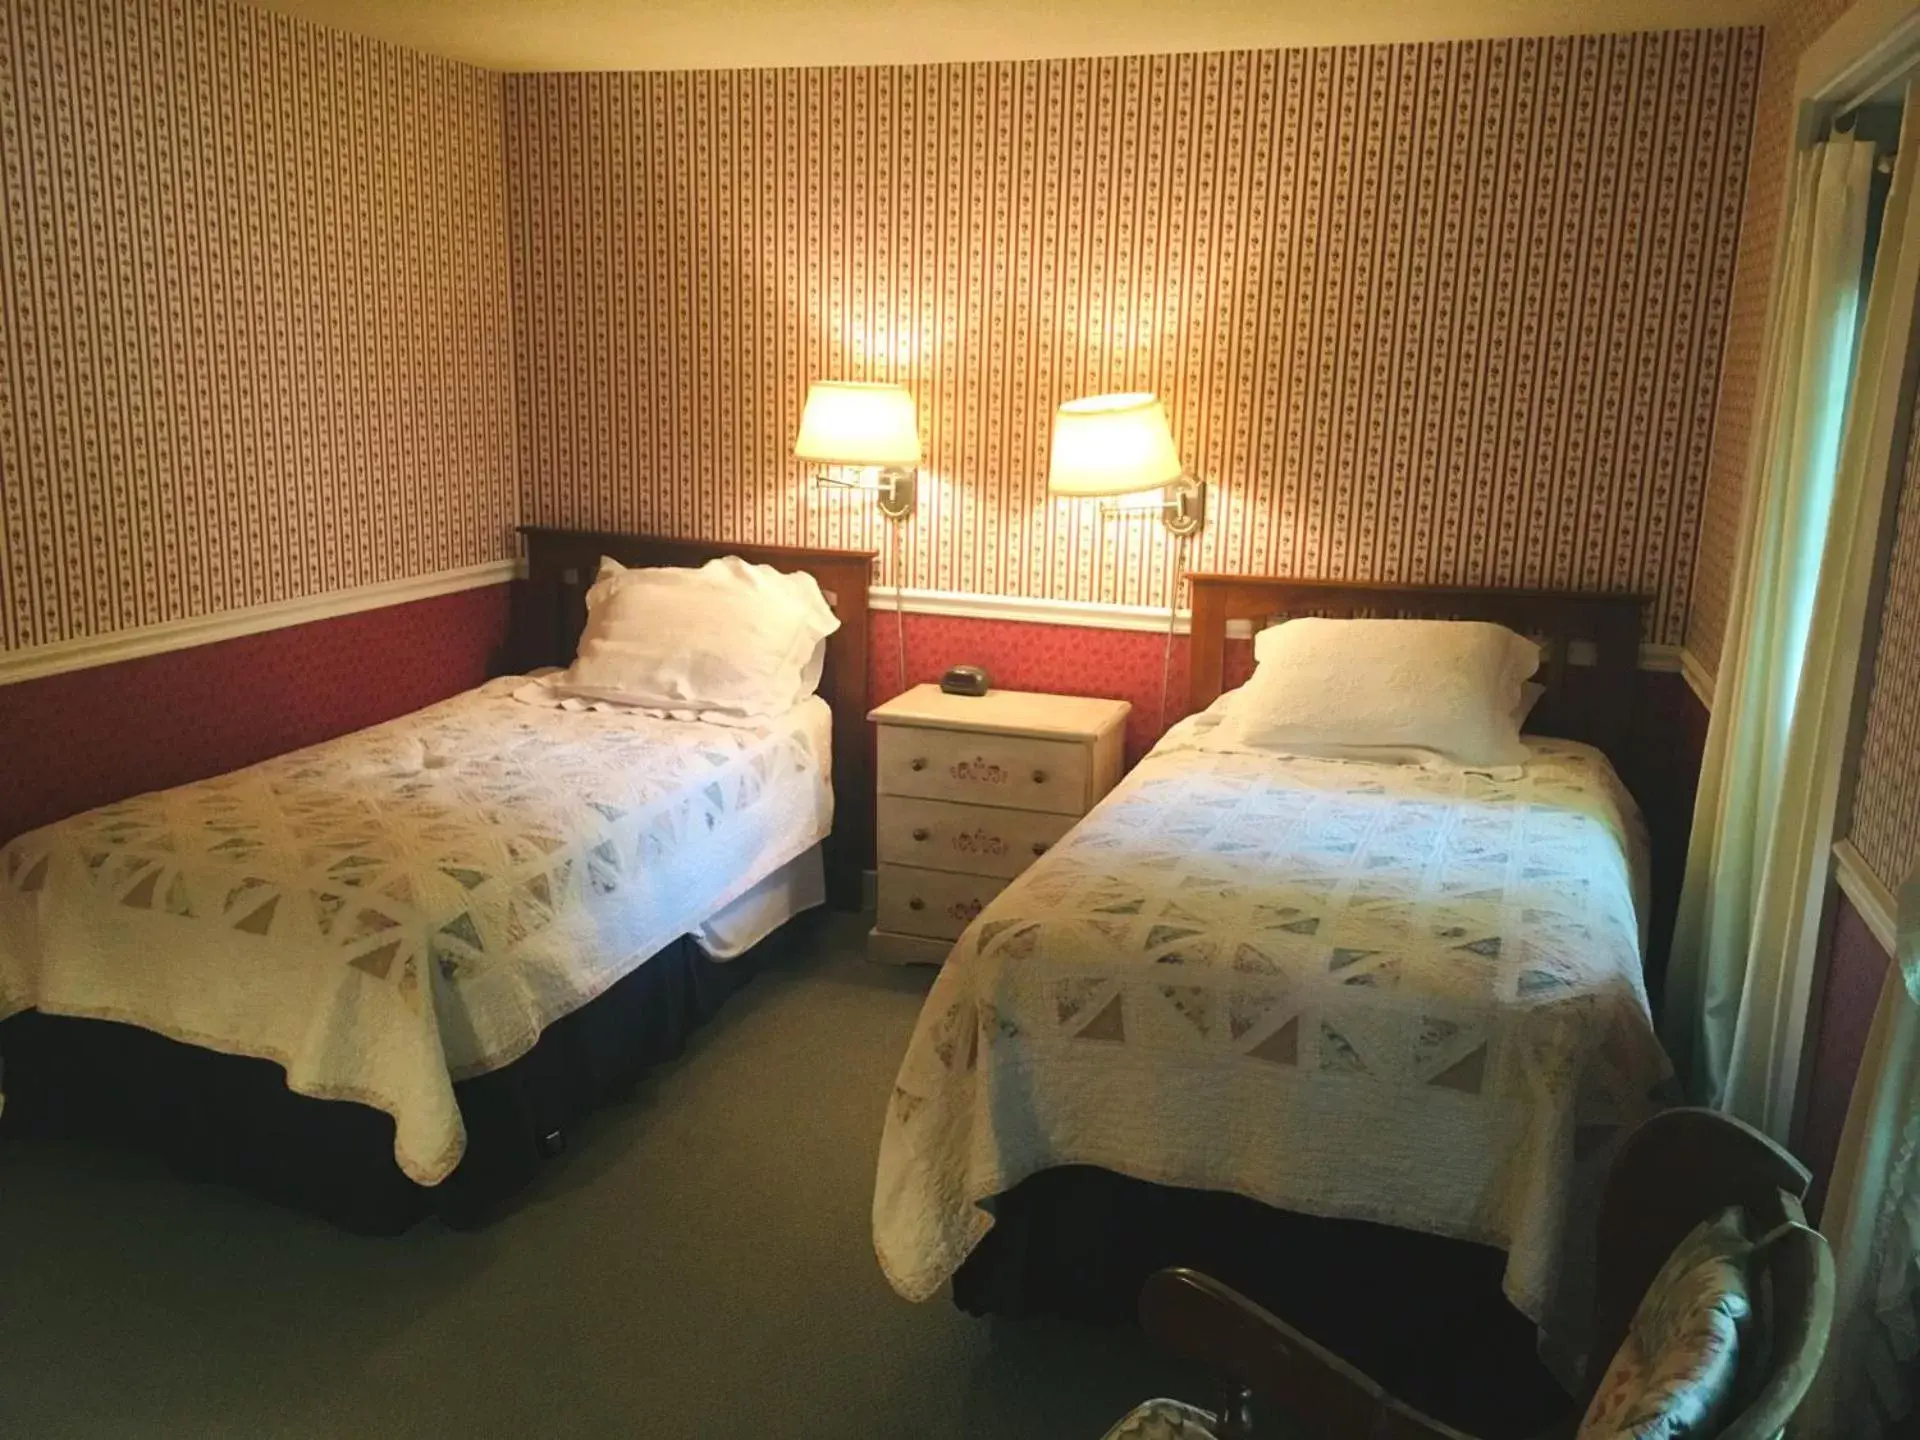 Bed in Carriage Barn Inn